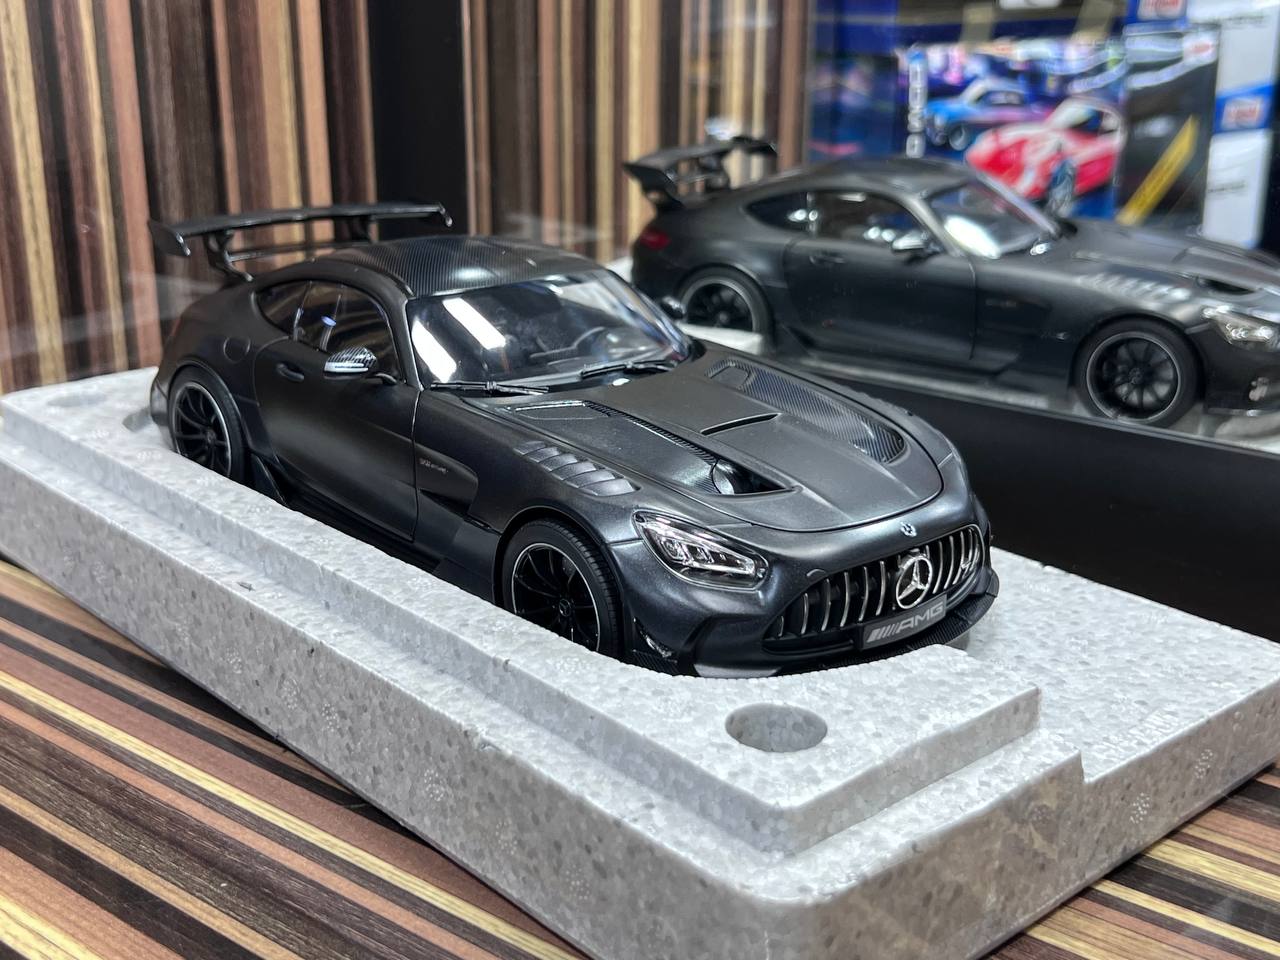 1/18 Diecast Mercedes-Benz GT Black Series Black Norev Scale Model Car